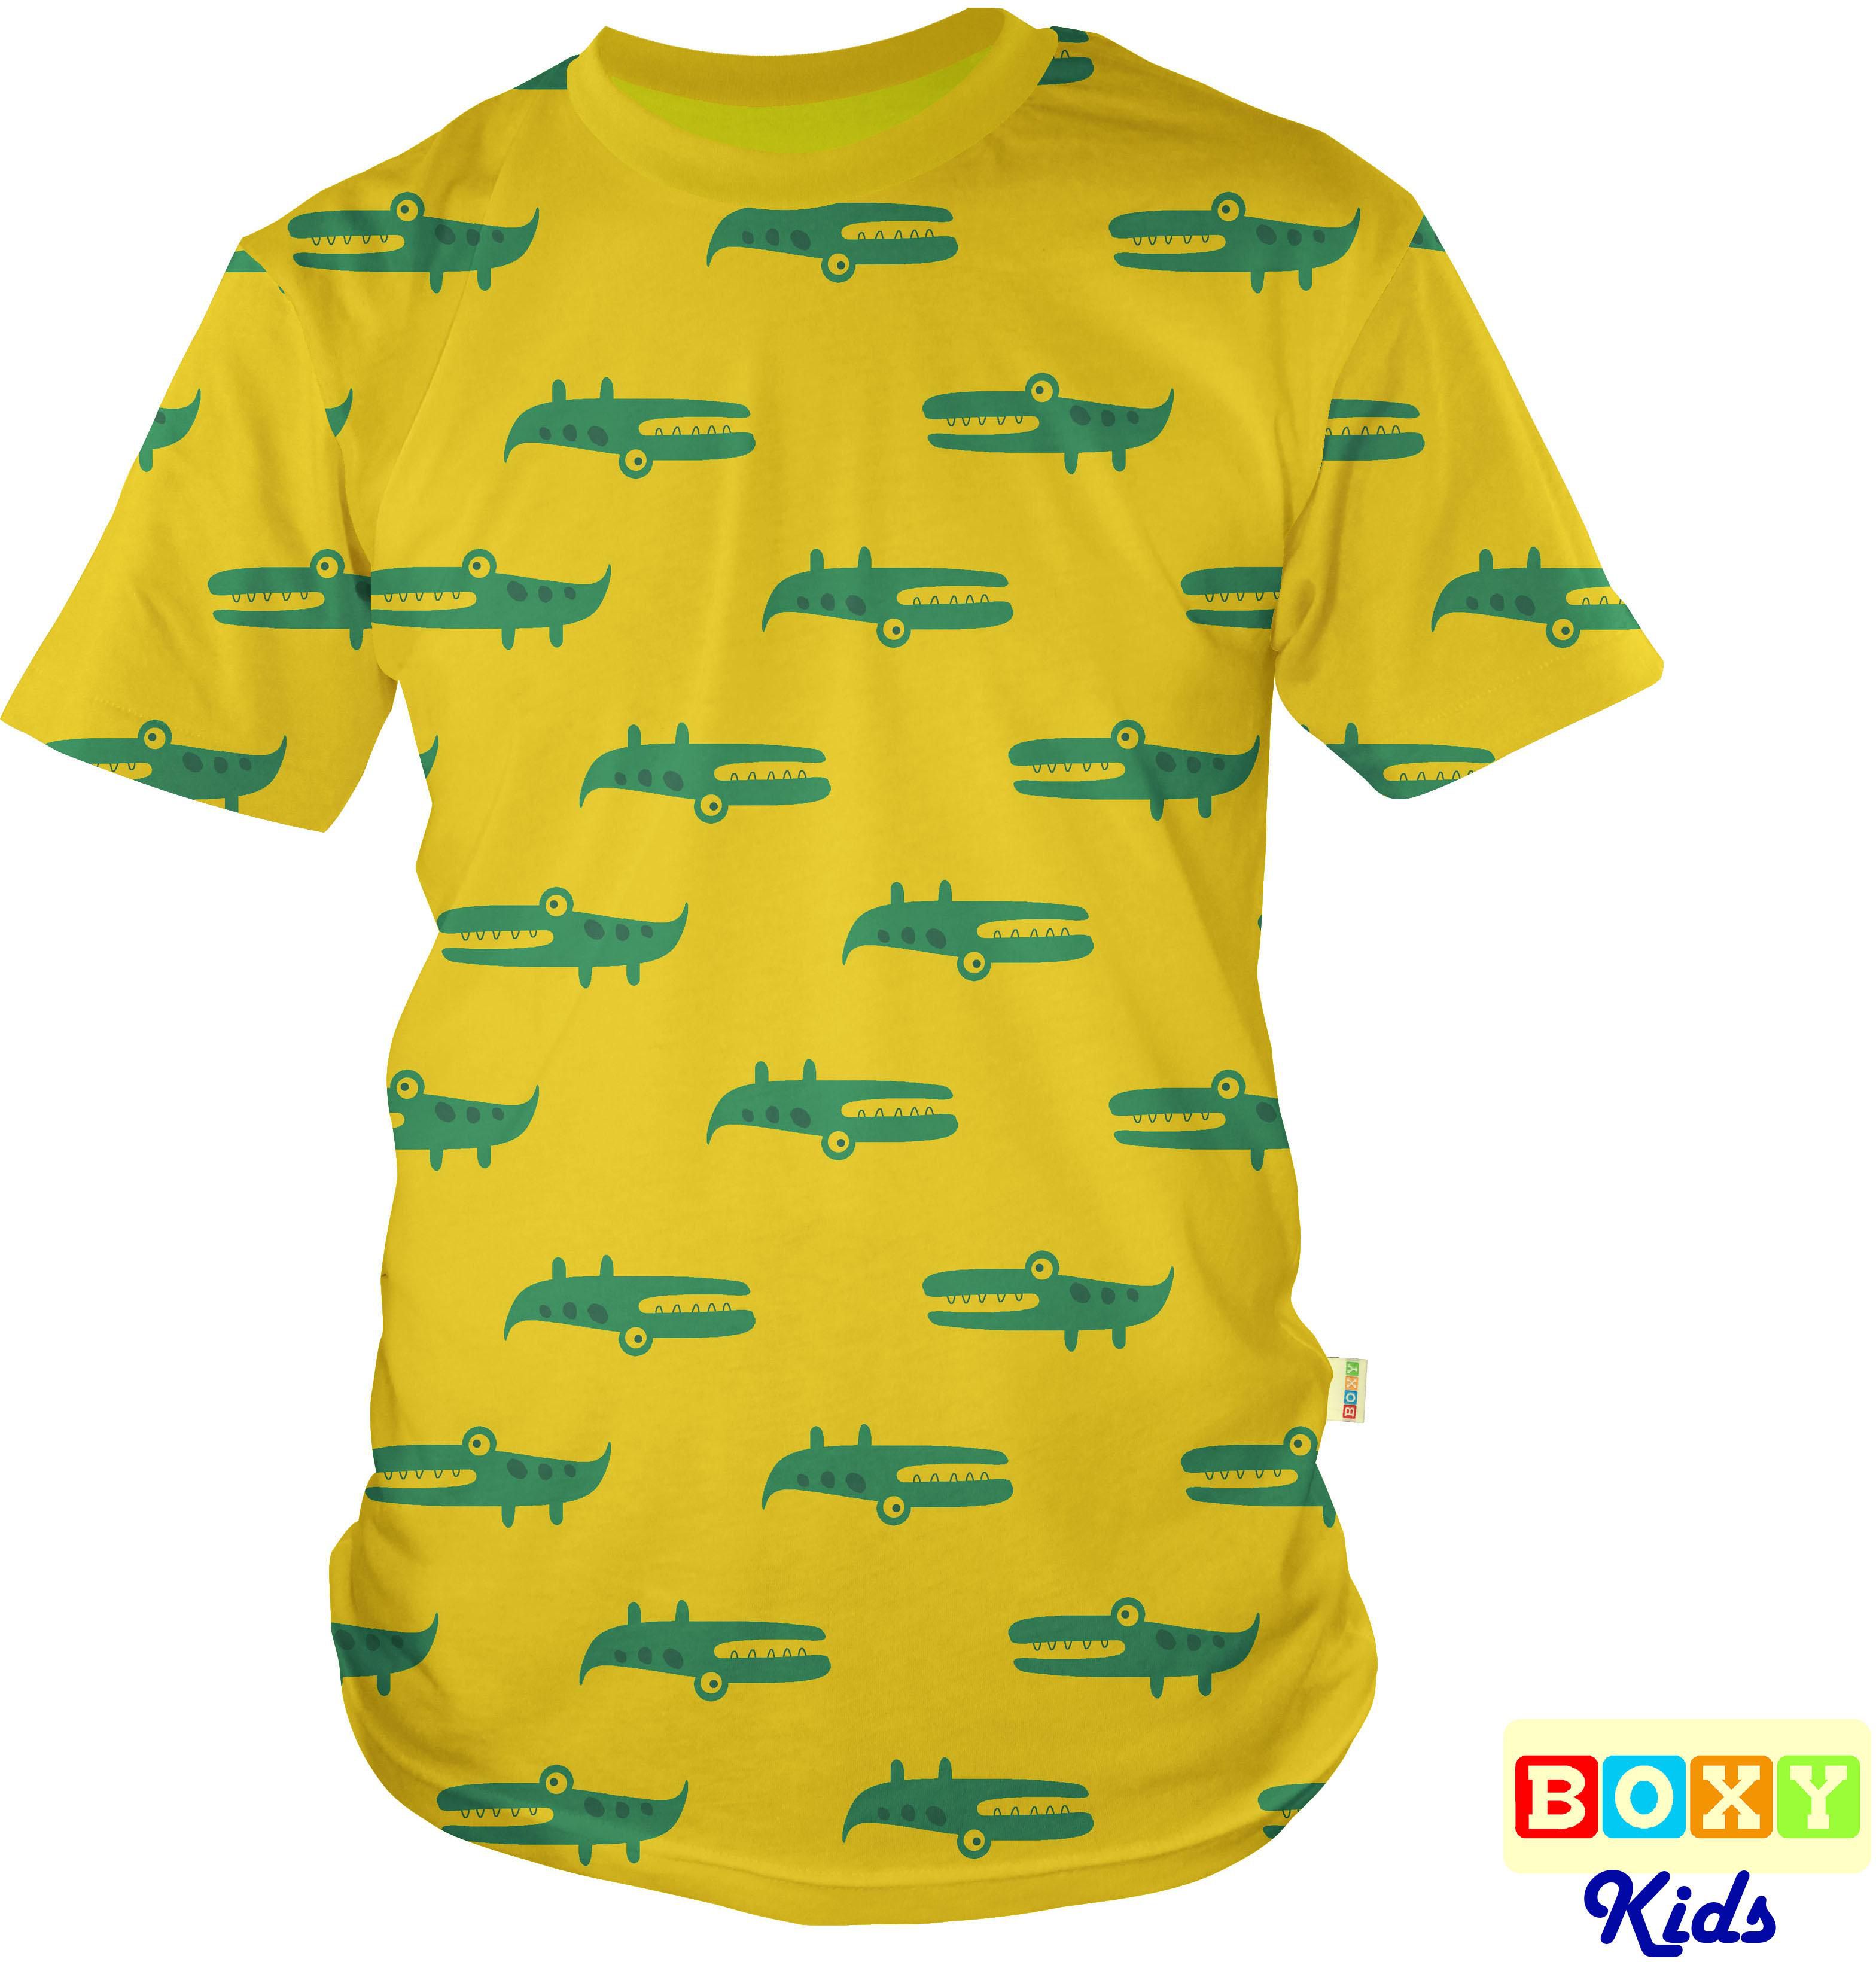 Boxy Kids Graphic Tee Clothing - 4 Sizes (Crocodile)